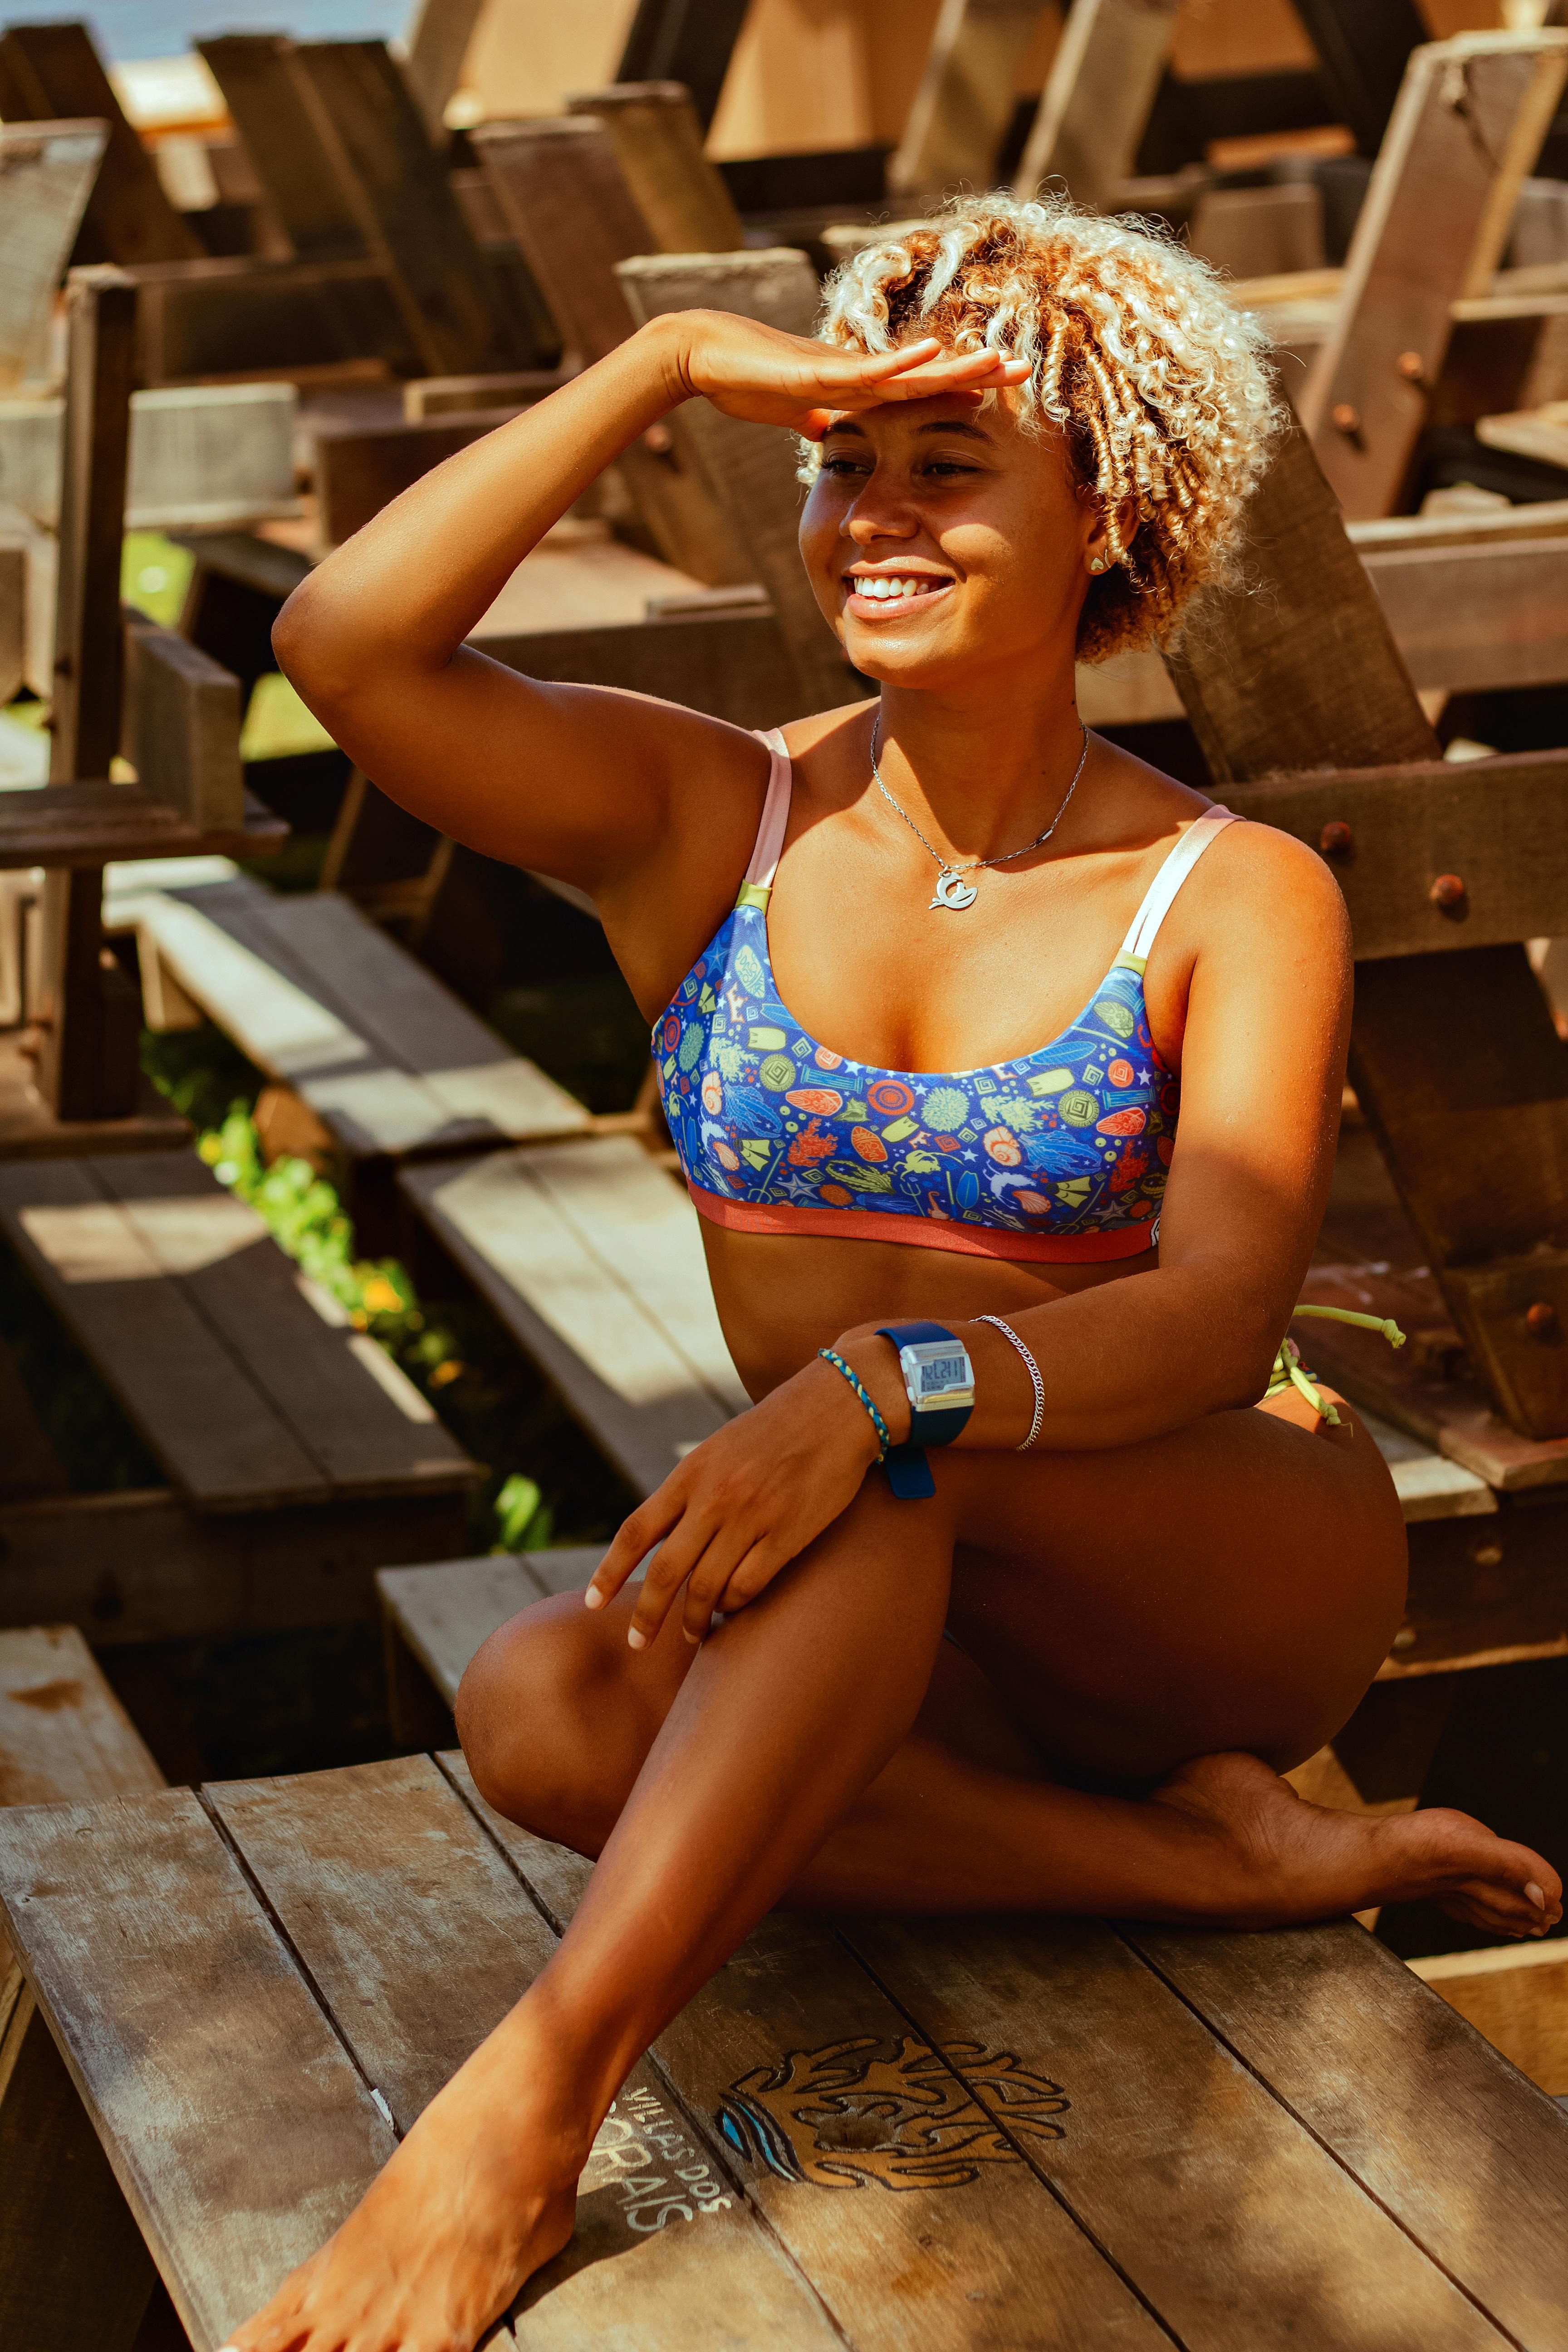 Portrait of girl wearing bikini top leaning against tree